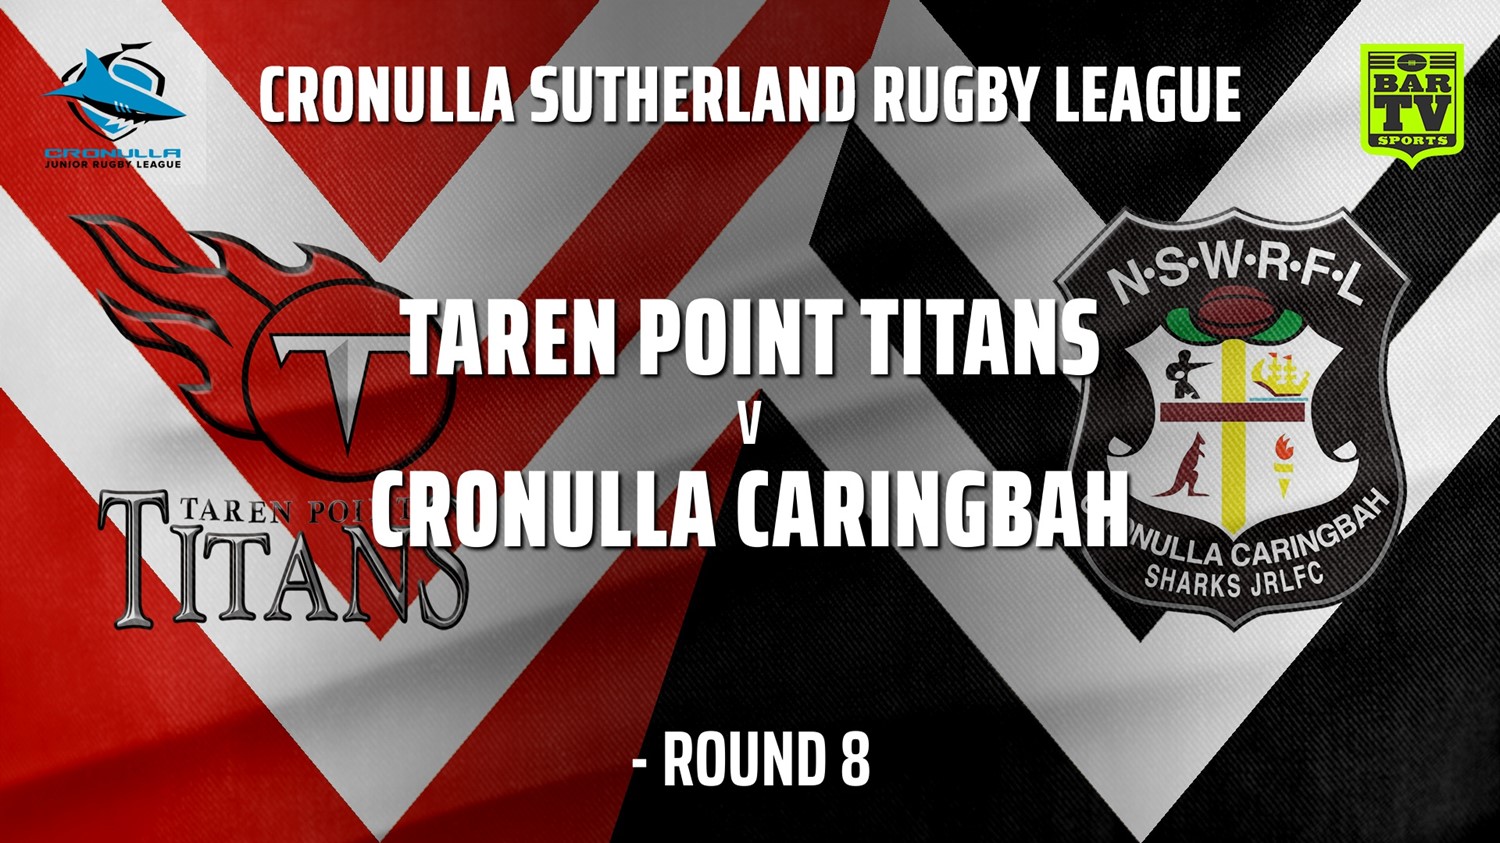 210626-Cronulla Juniors - Under 10 Silver Round 8 - Taren Point Titans v Cronulla Caringbah (2) Slate Image